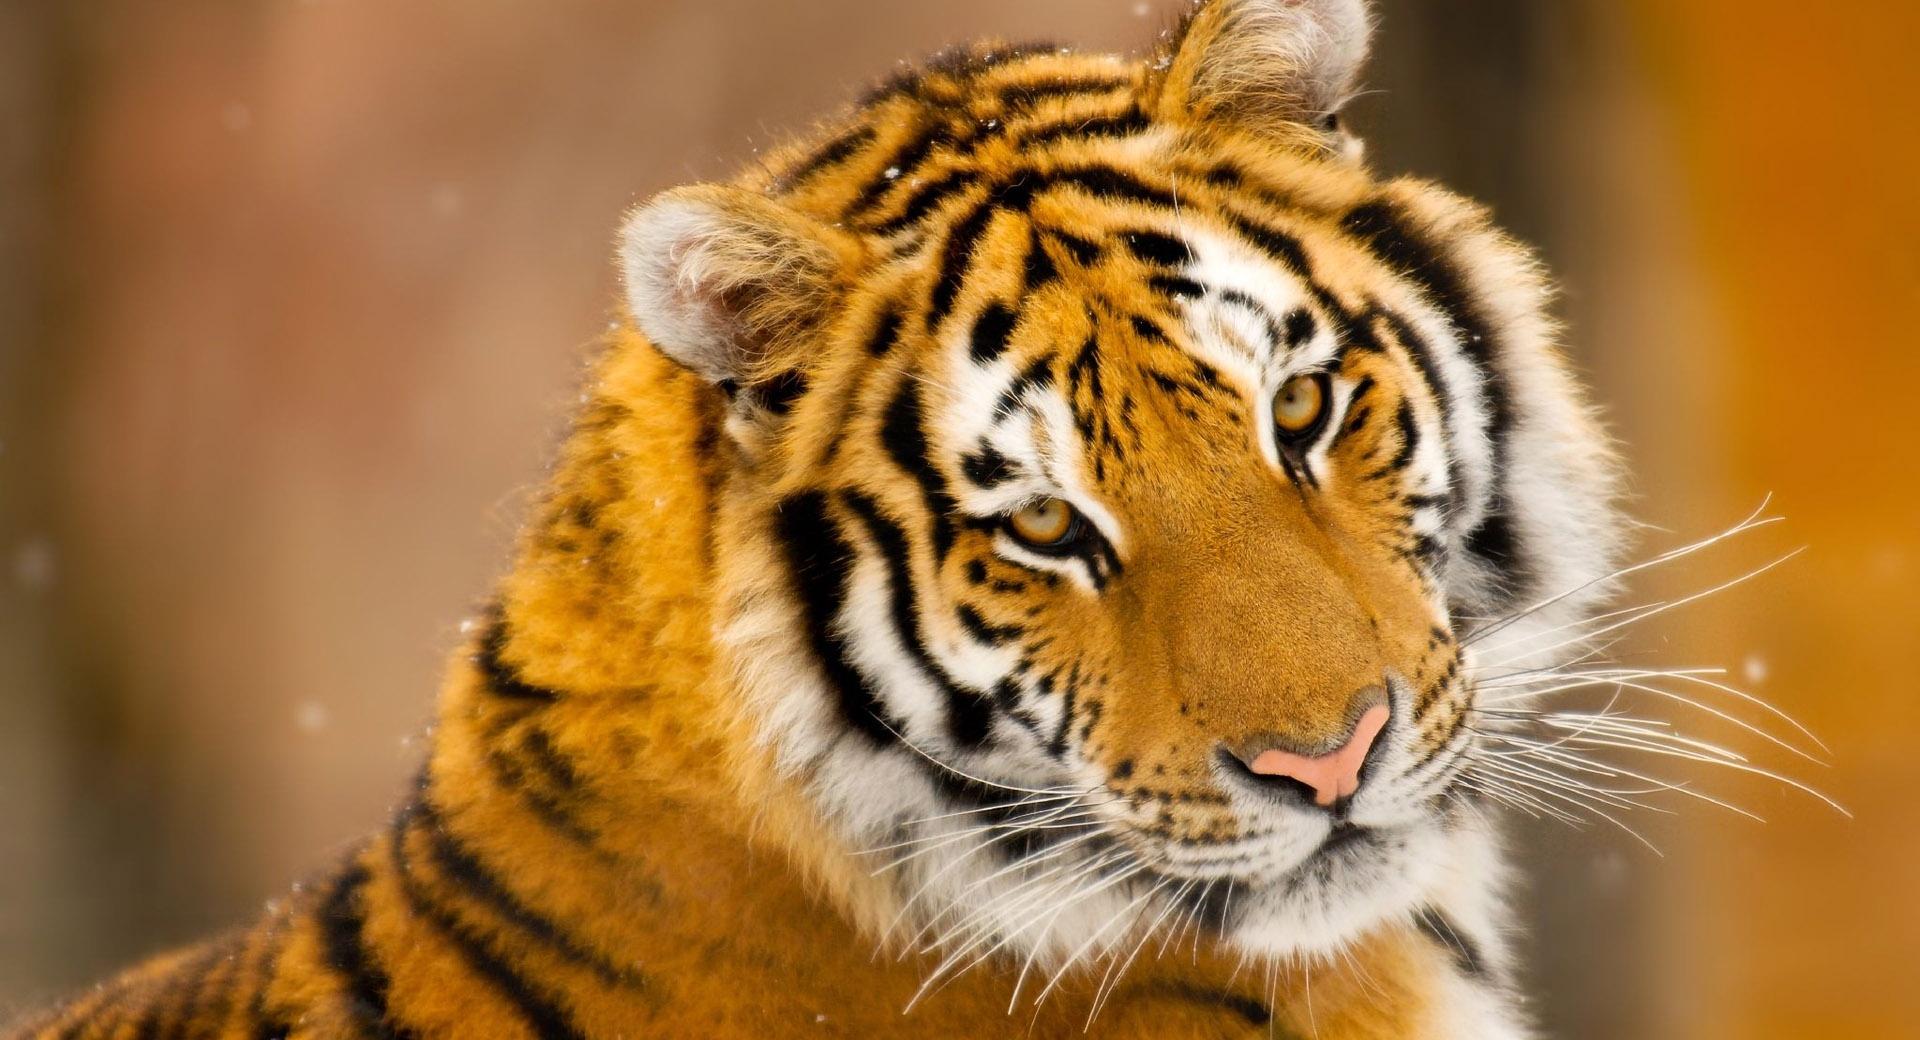 Siberian Tiger Wild Animal at 1024 x 1024 iPad size wallpapers HD quality